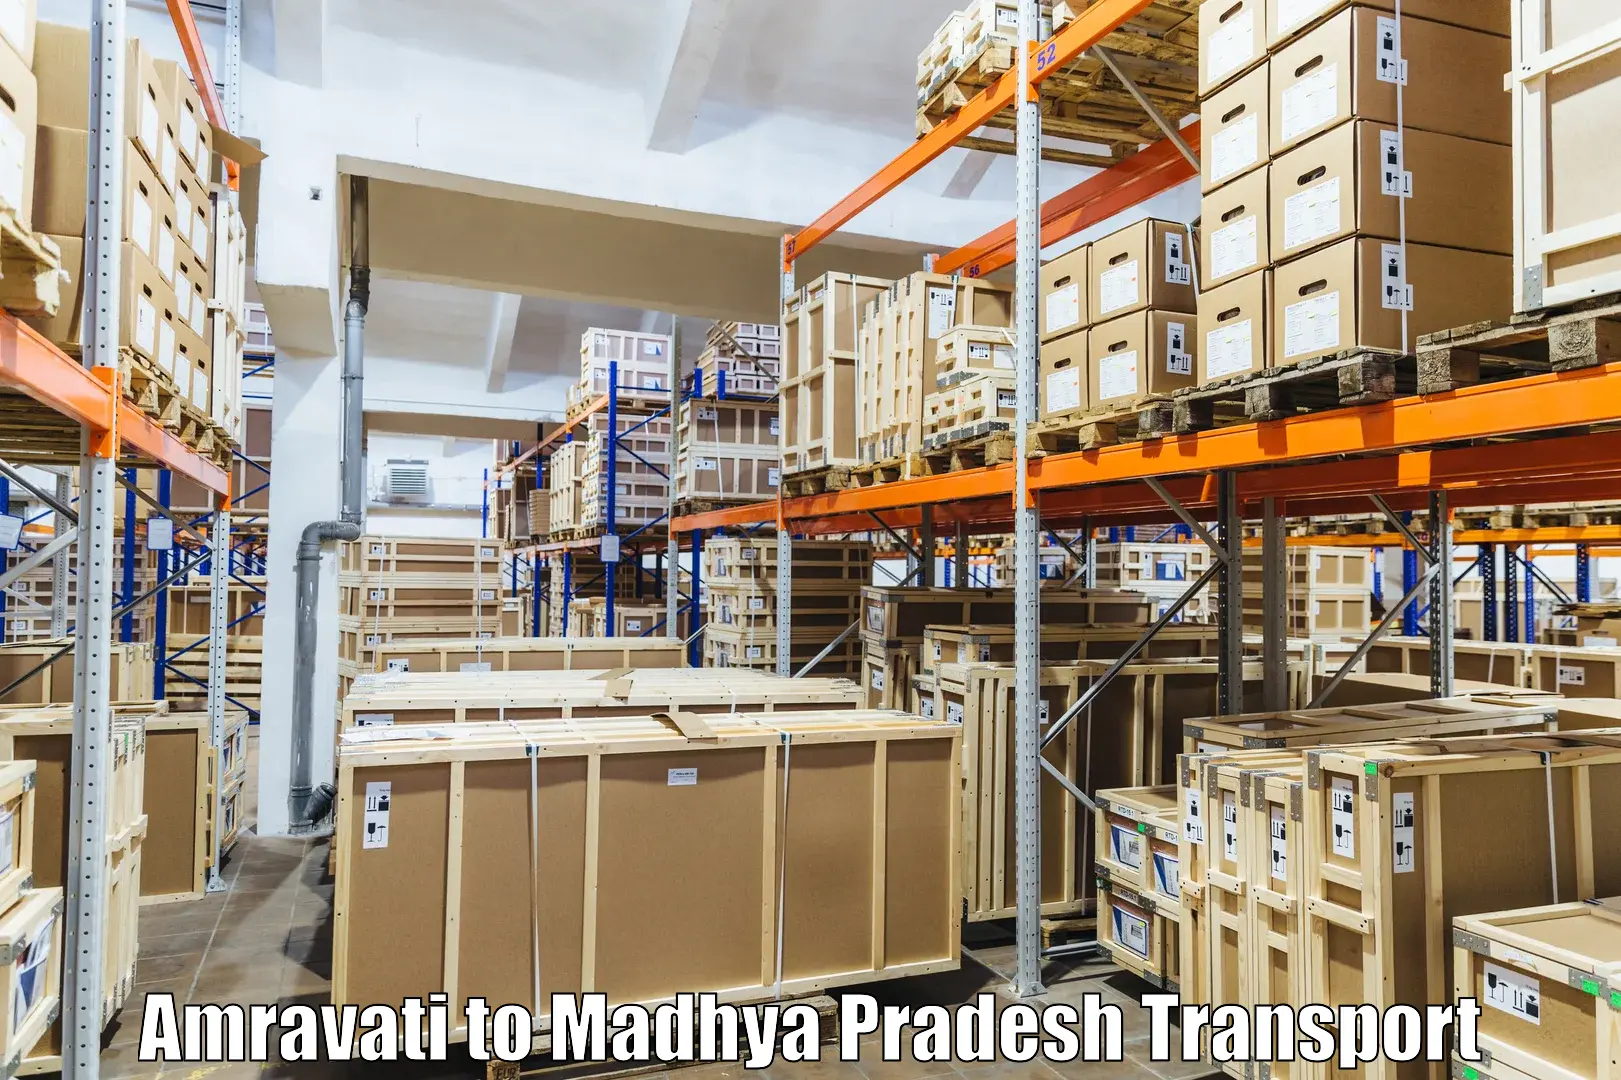 Vehicle transport services in Amravati to Sendhwa